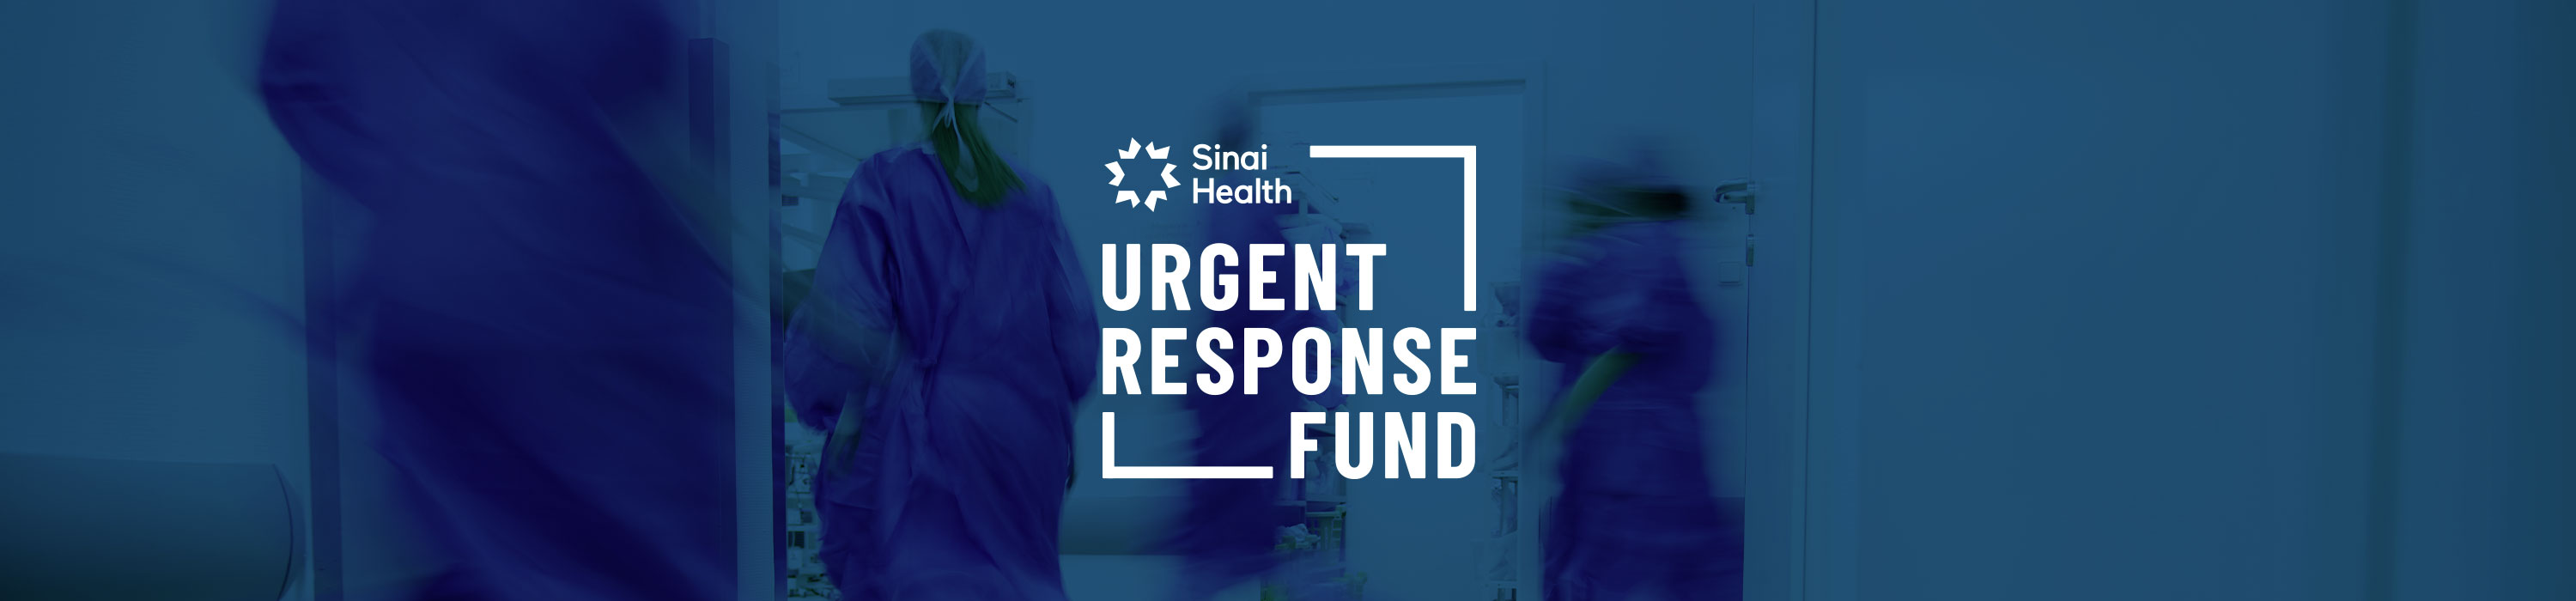 Sinai Health Urgent Response Fund